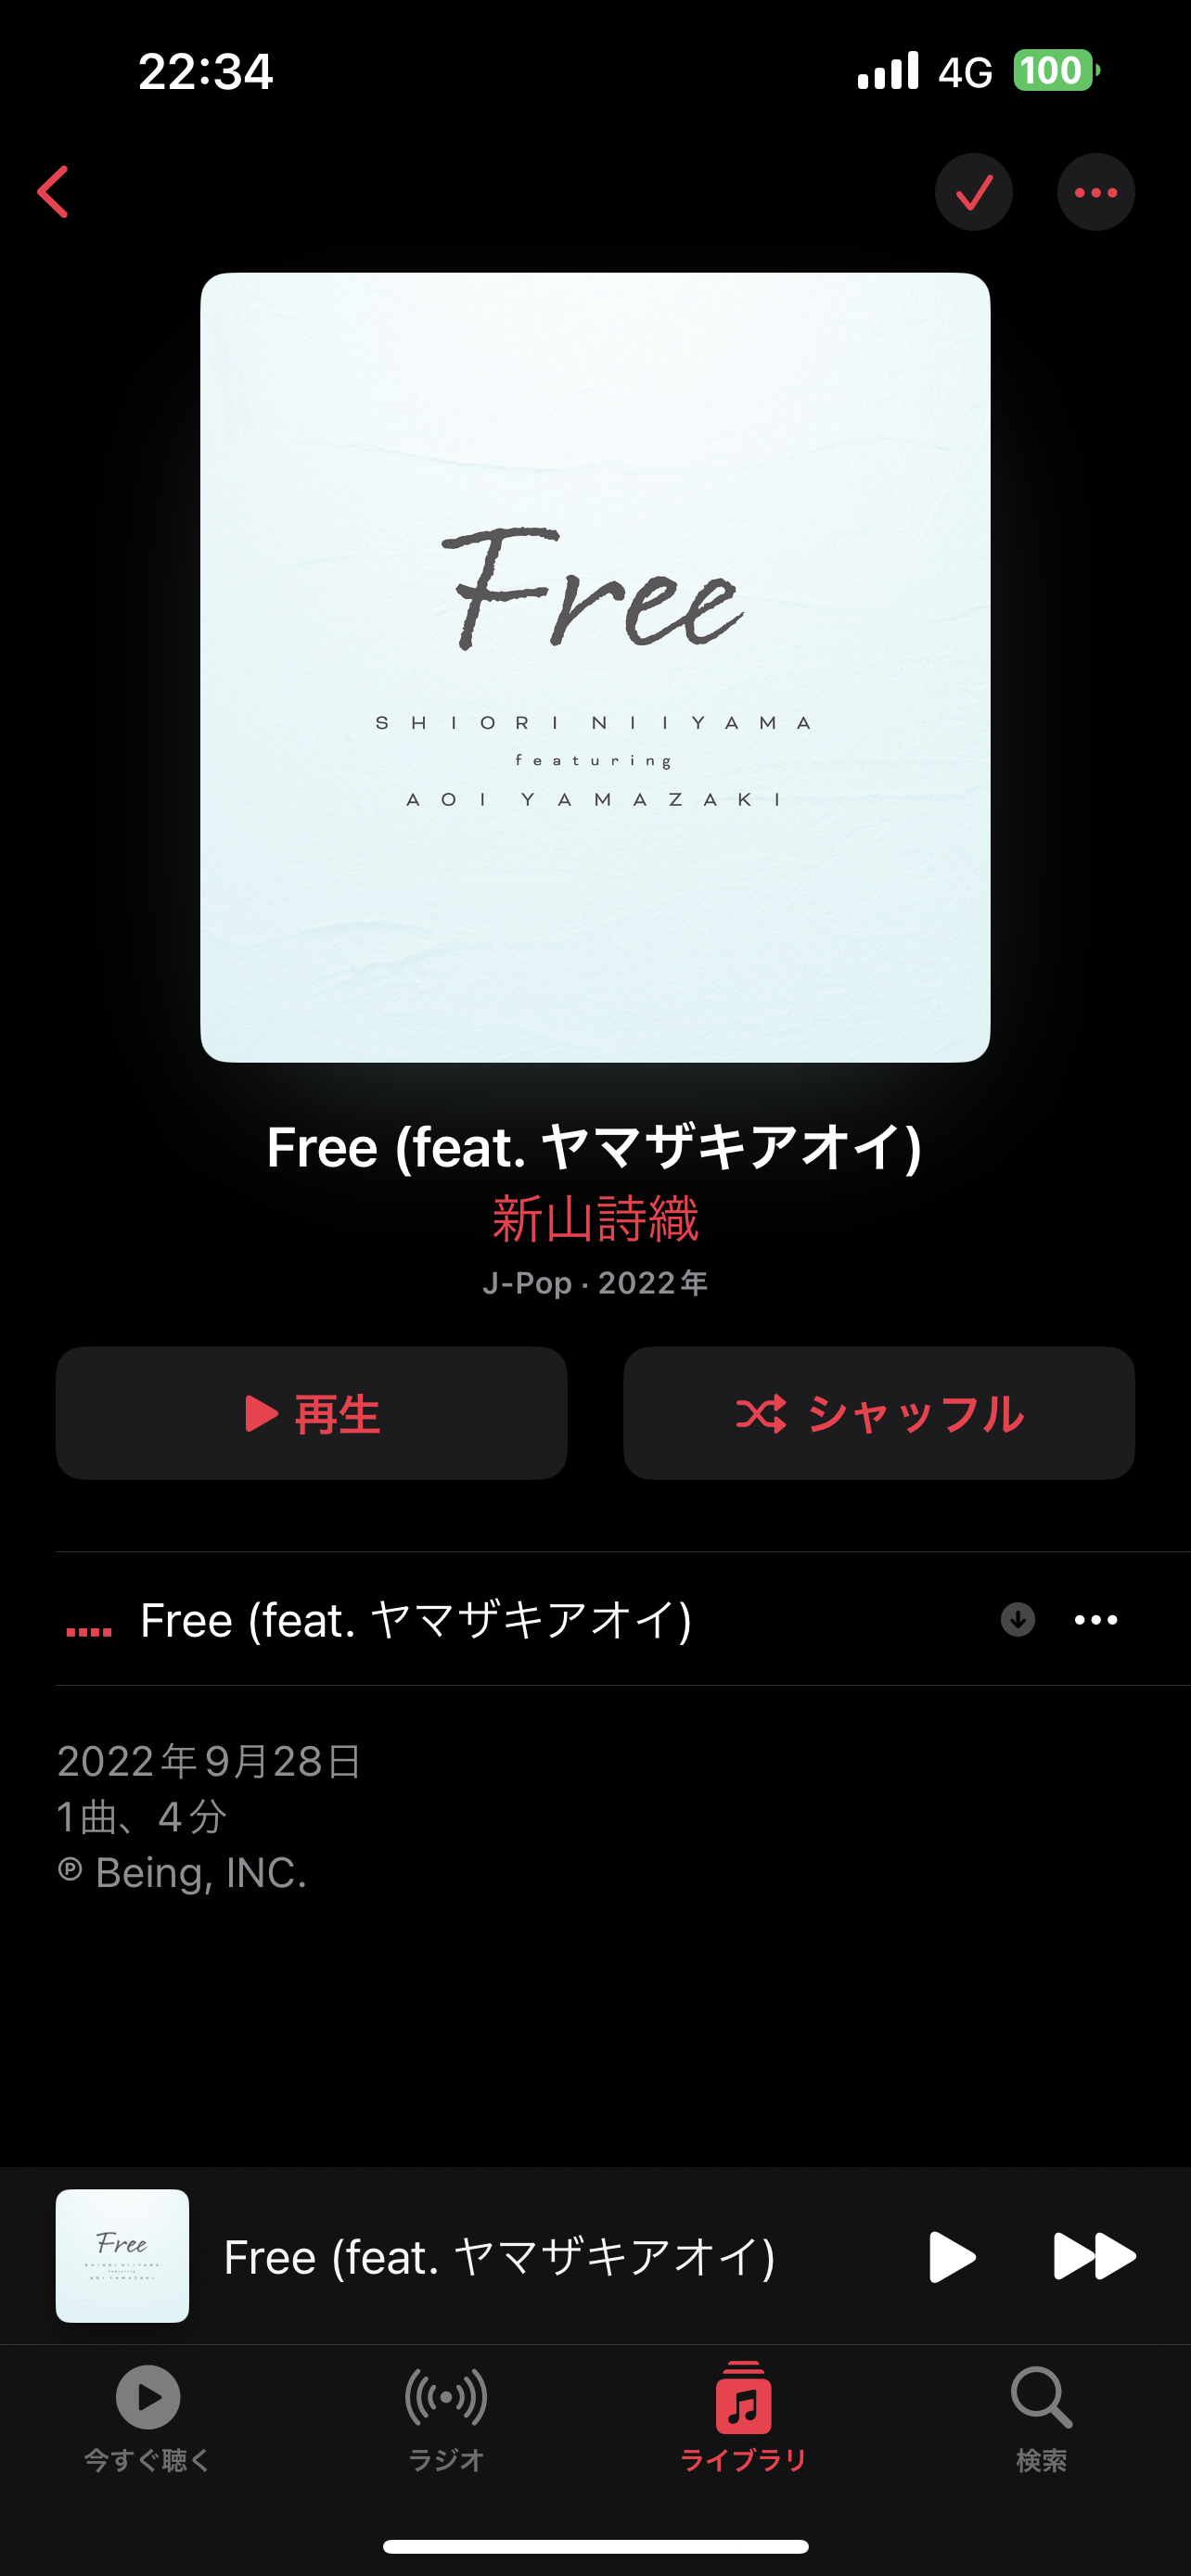 Free (feat.山崎あおい)